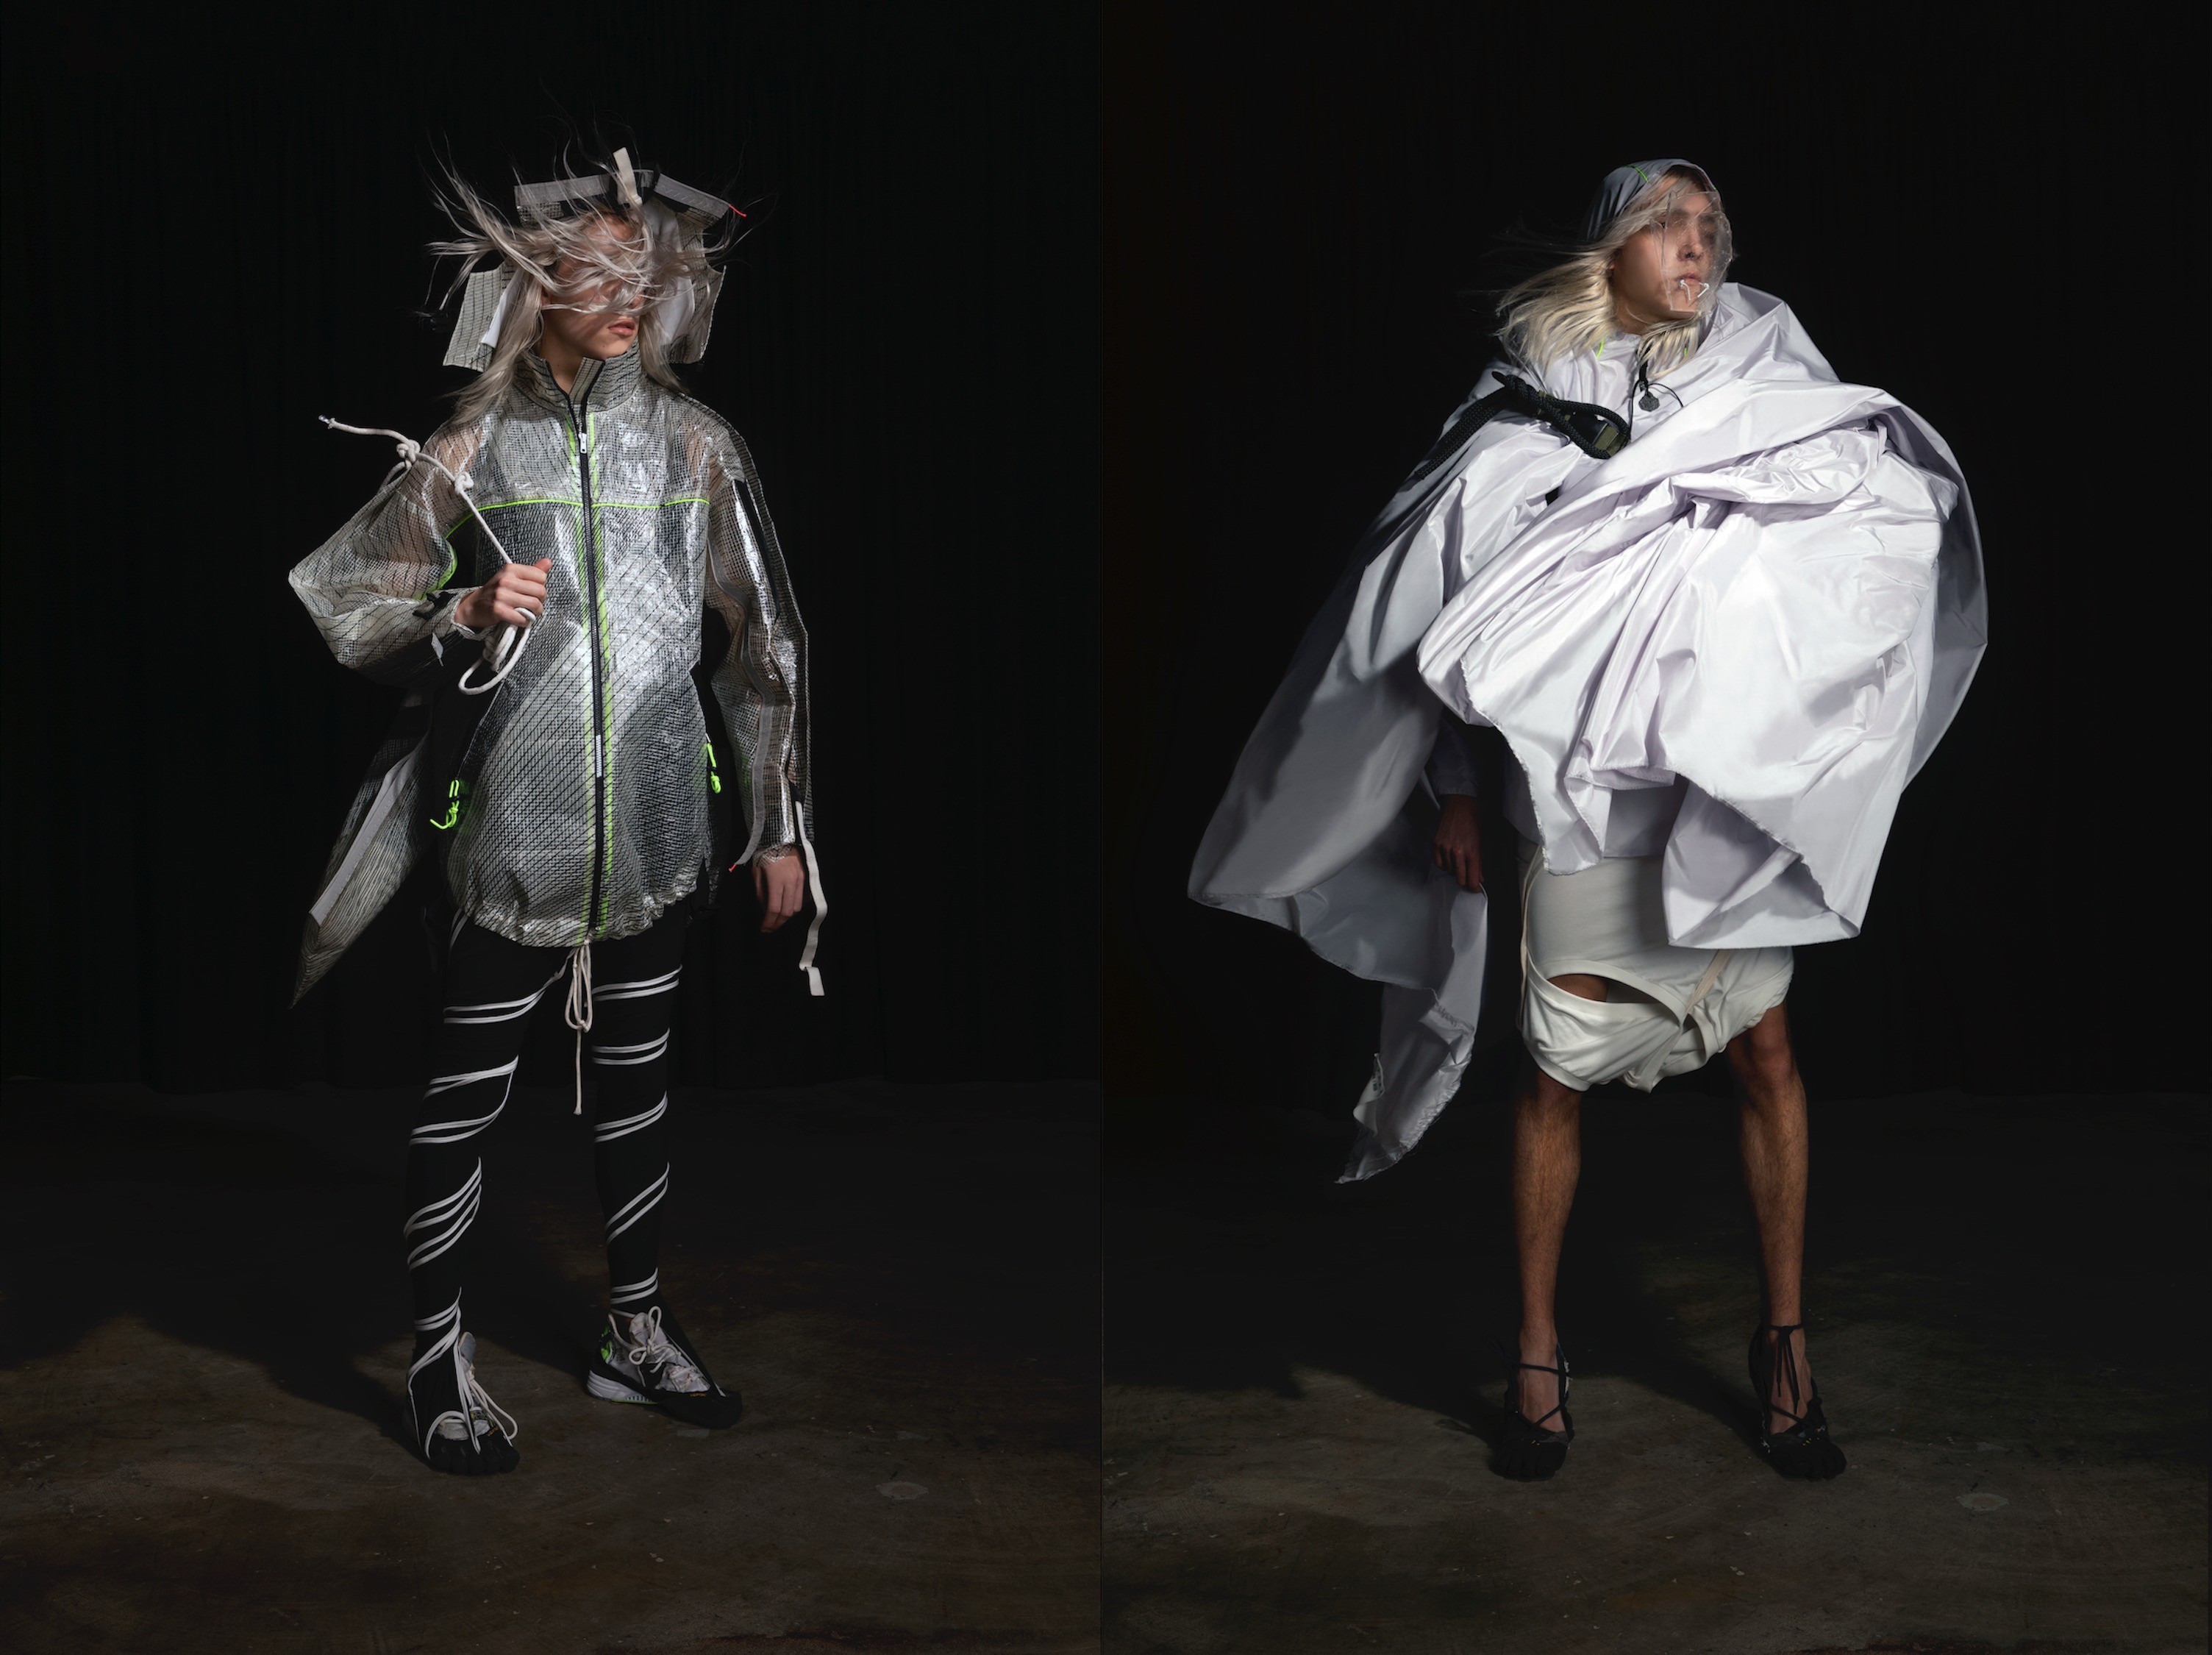 Bin day: why trash fashion is still inspiring designers - The Face